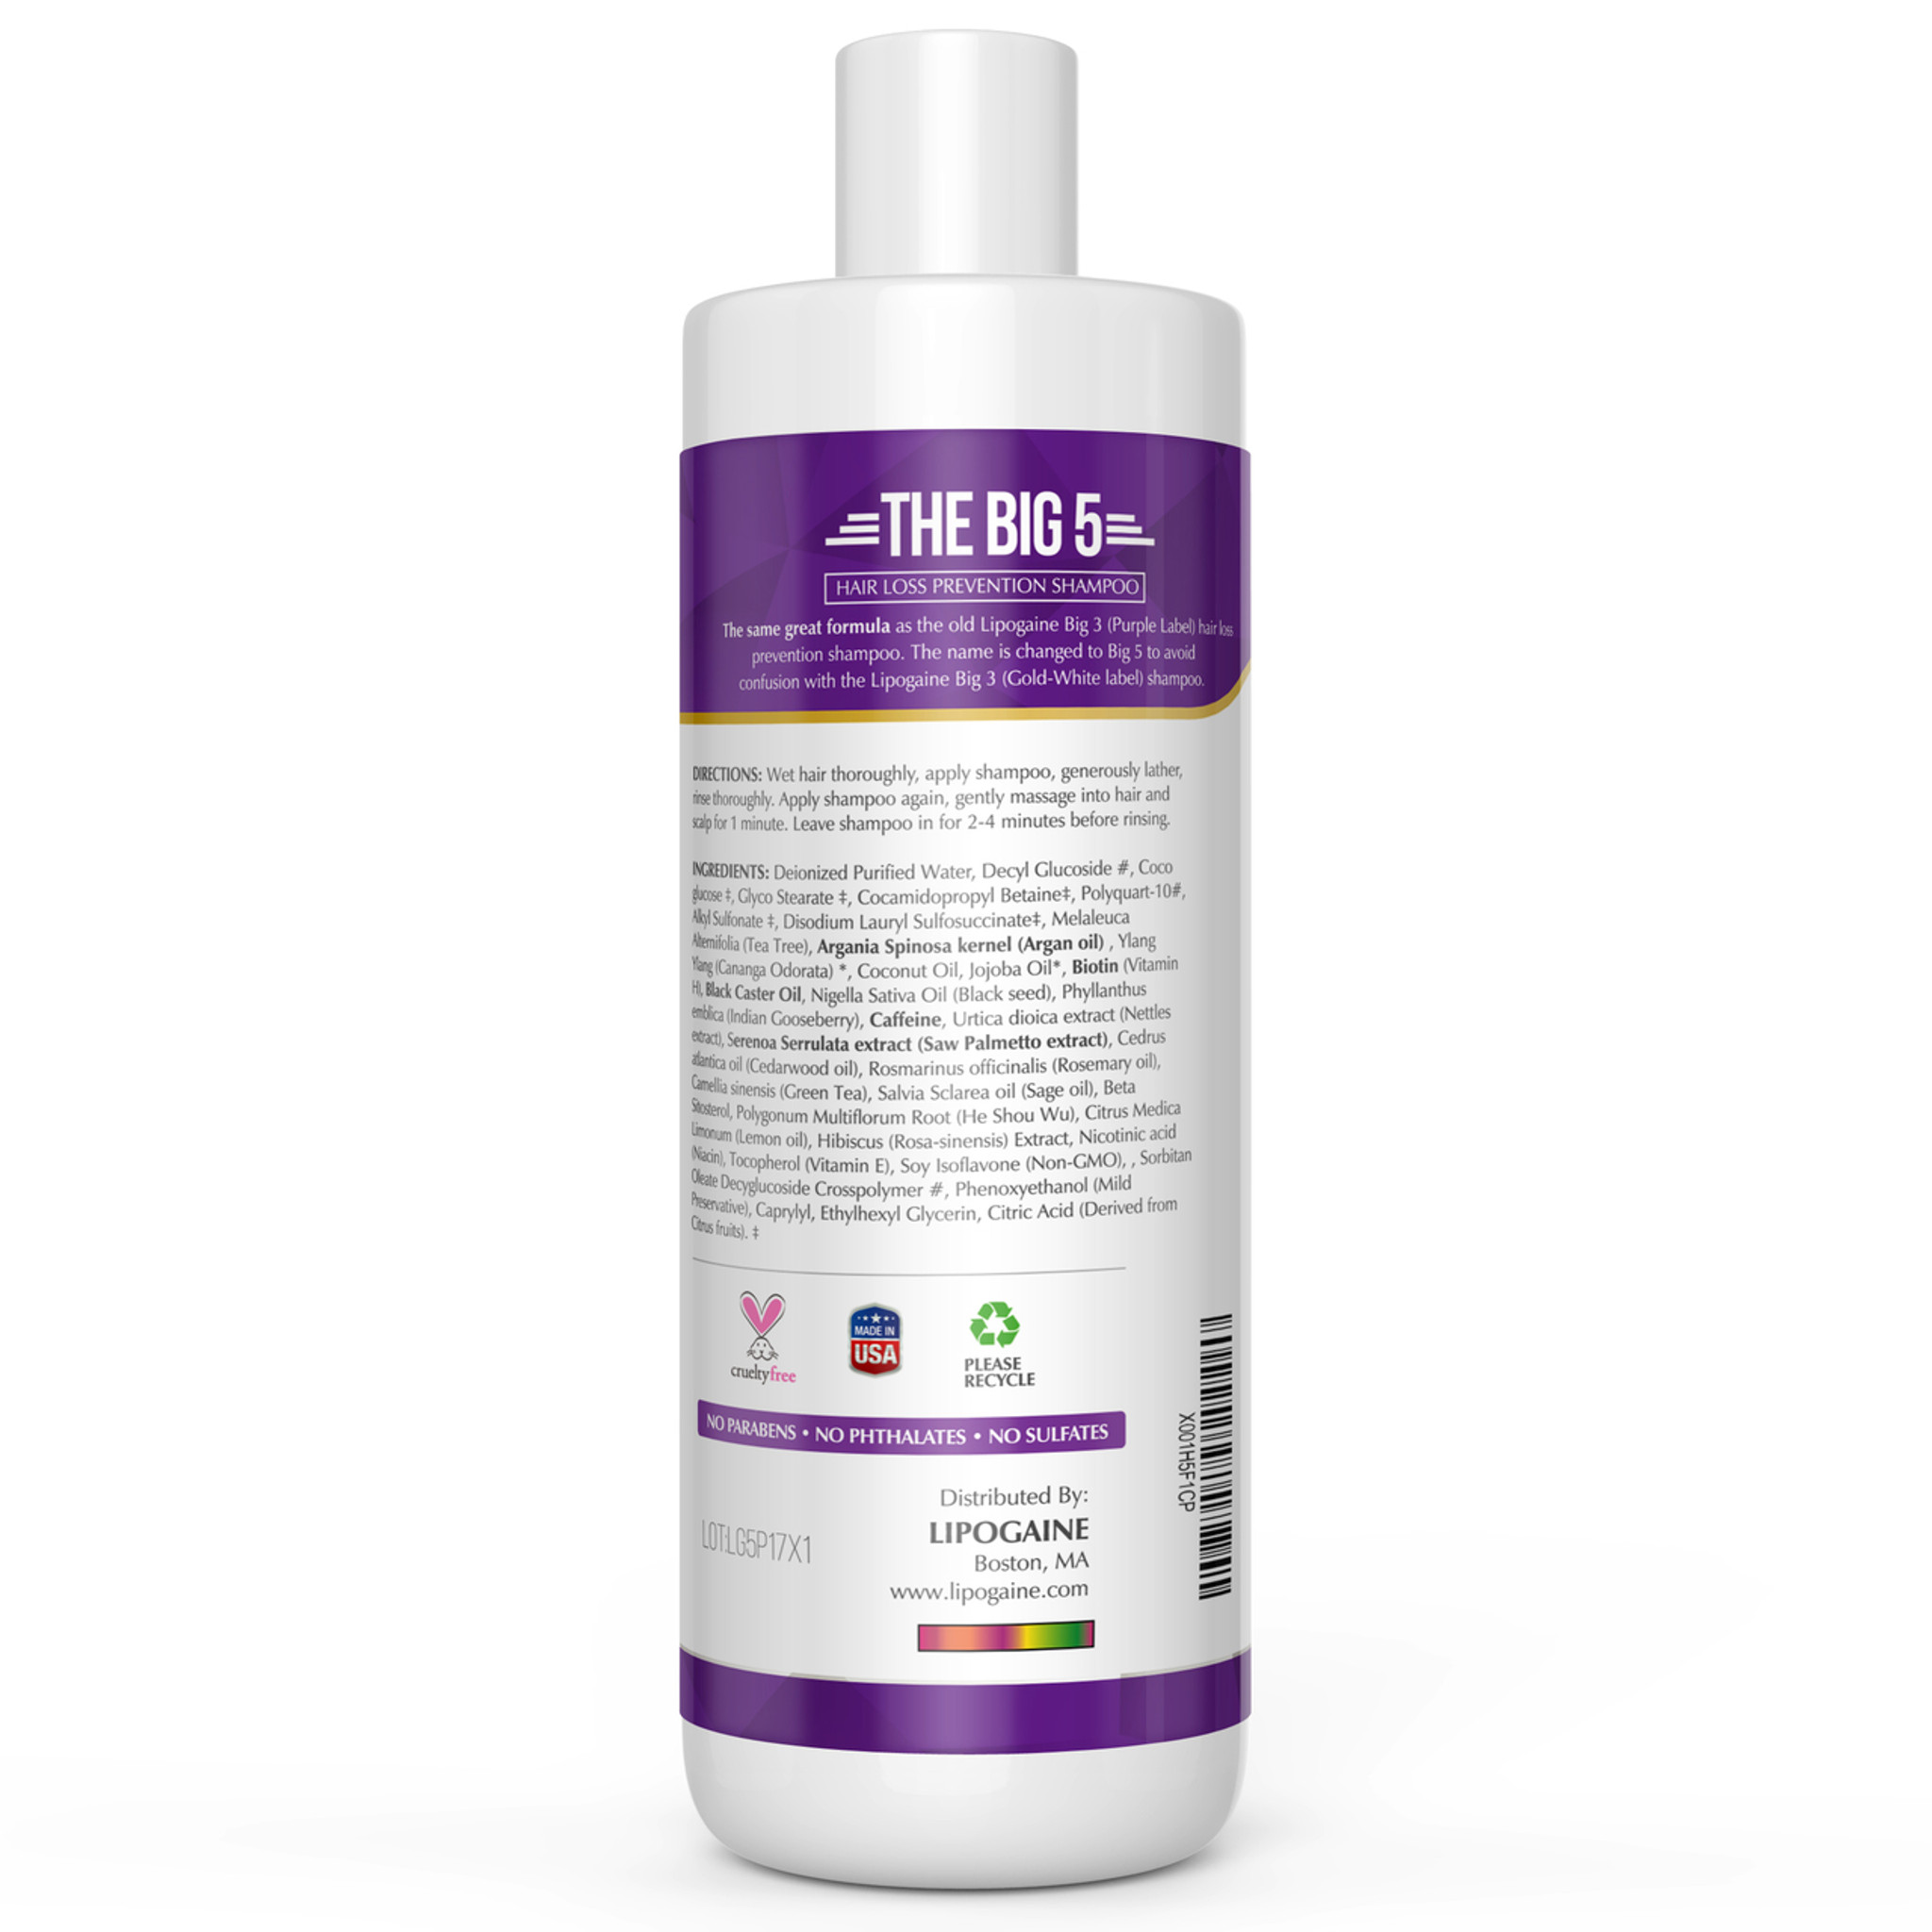 Lipogaine Big 5 Shampoo (Purple Label)